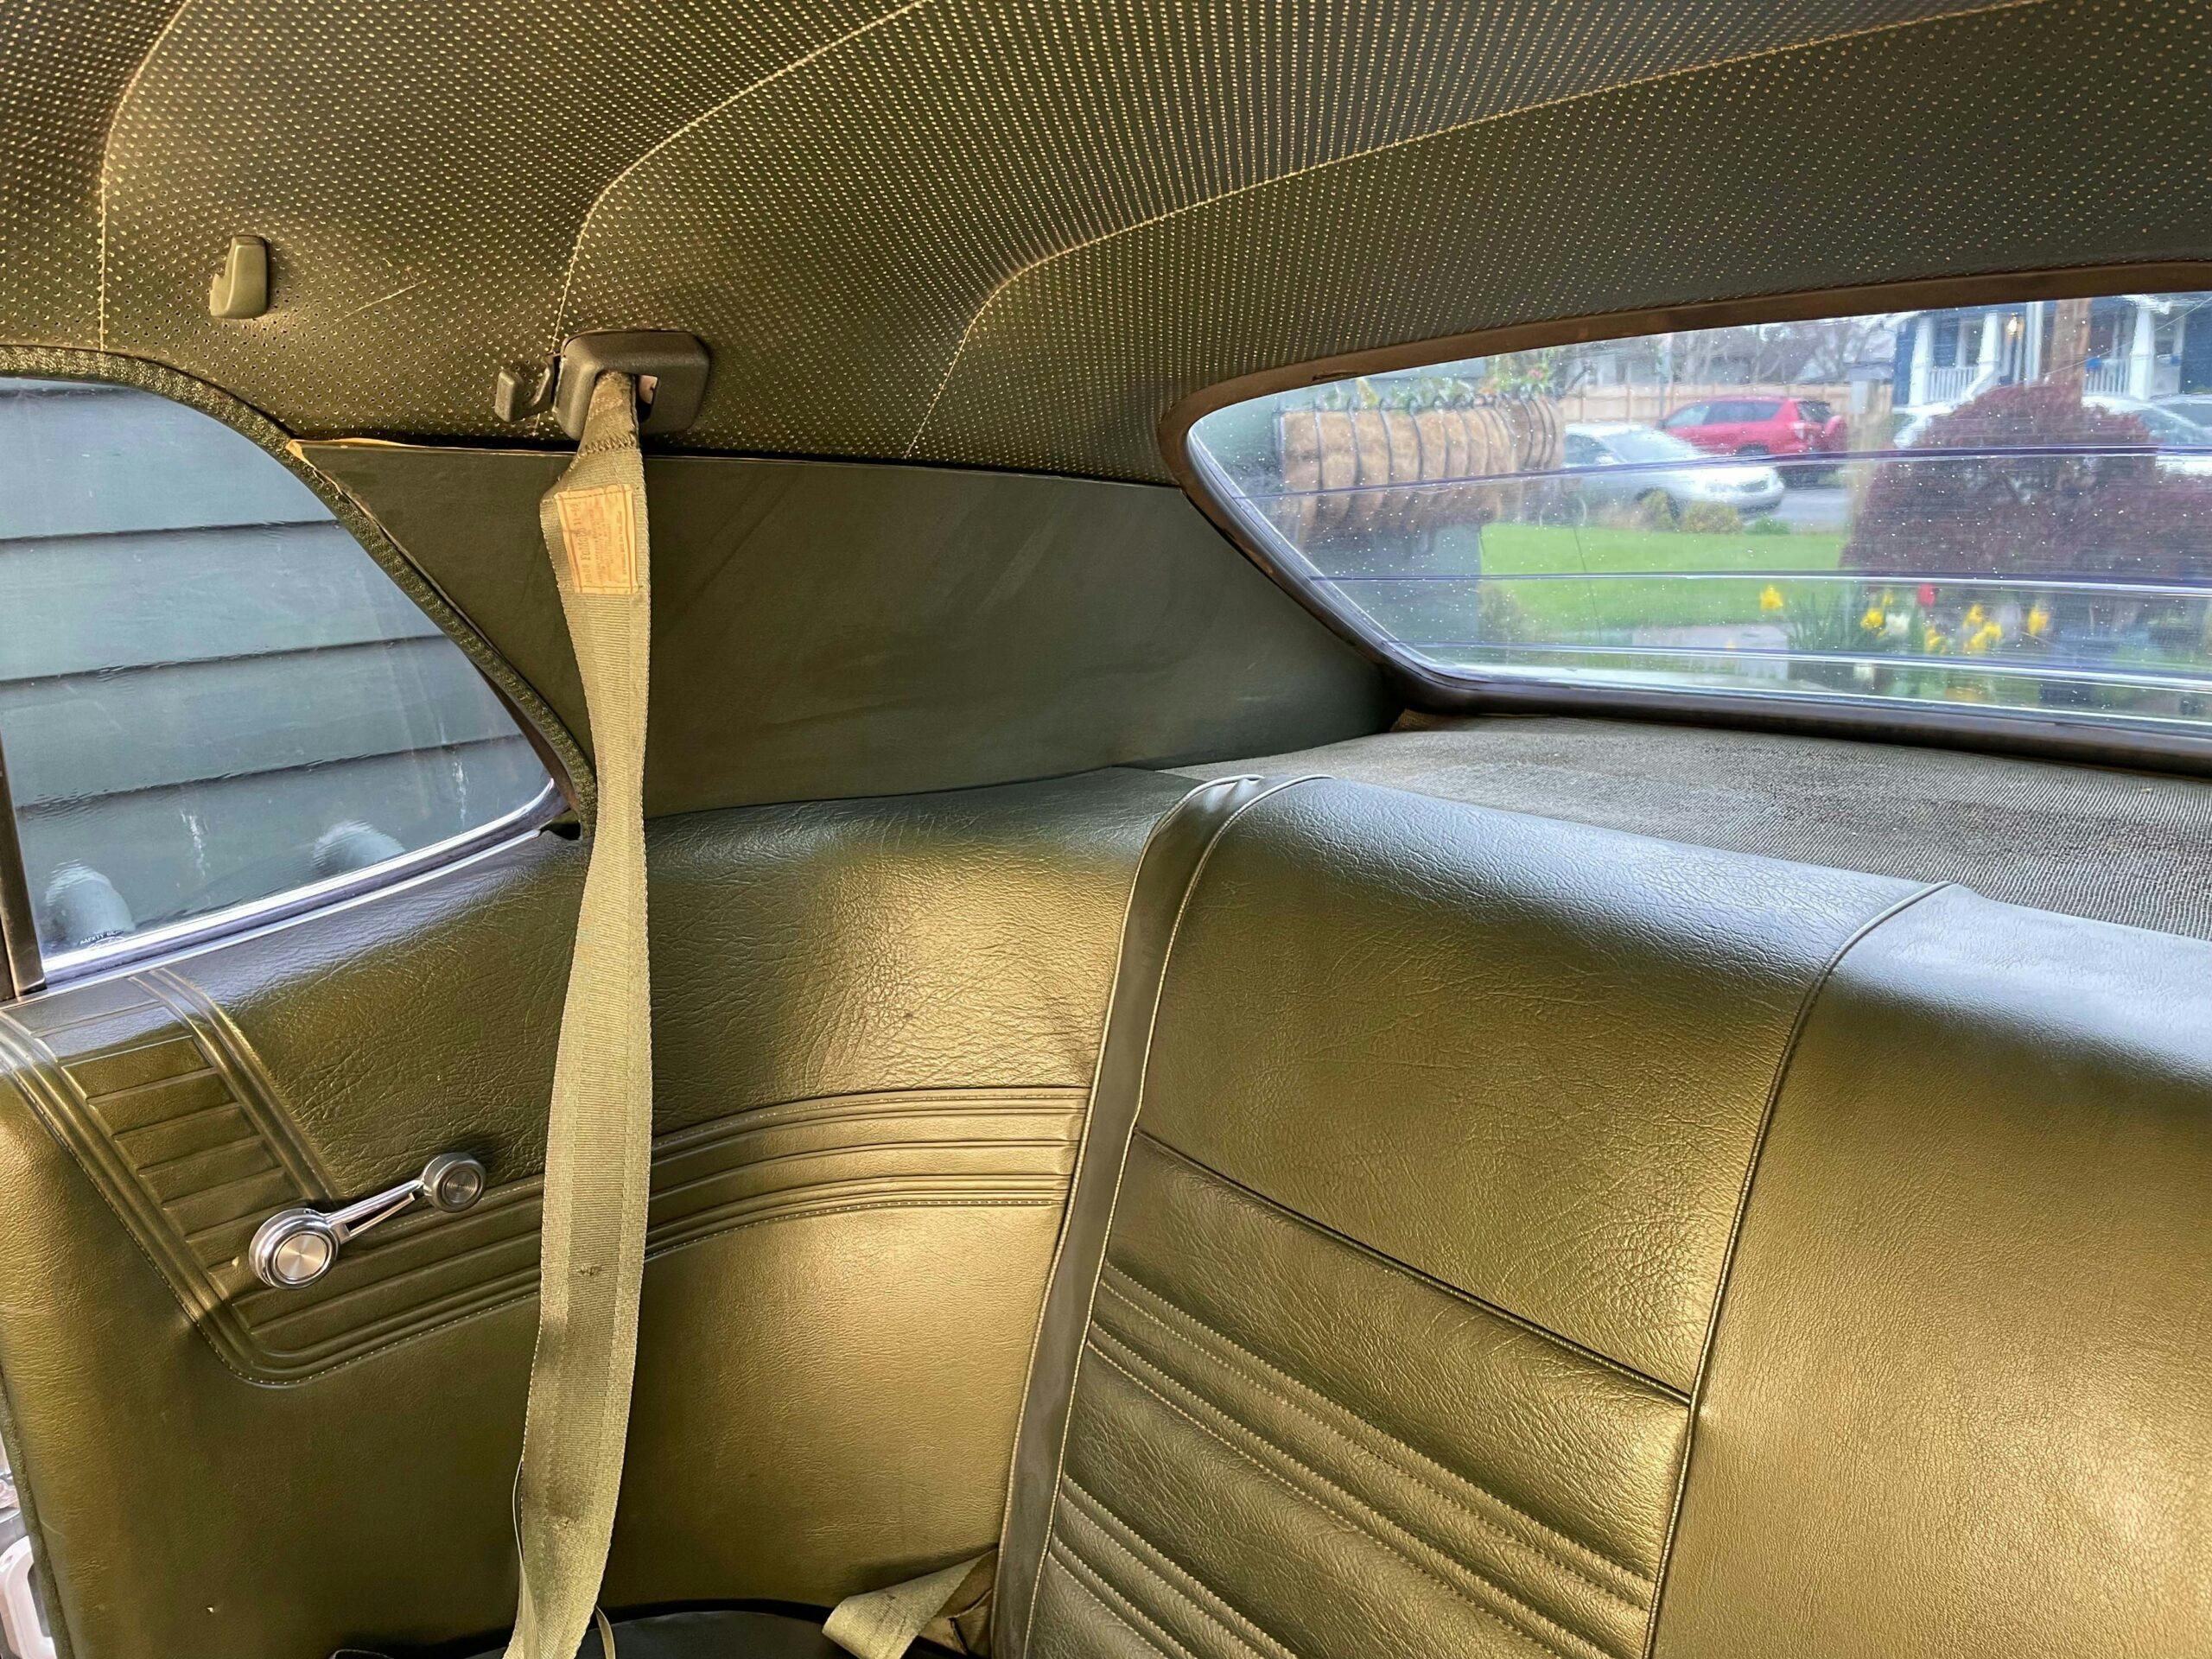 1970 Mercury Cougar interior rear upholstery